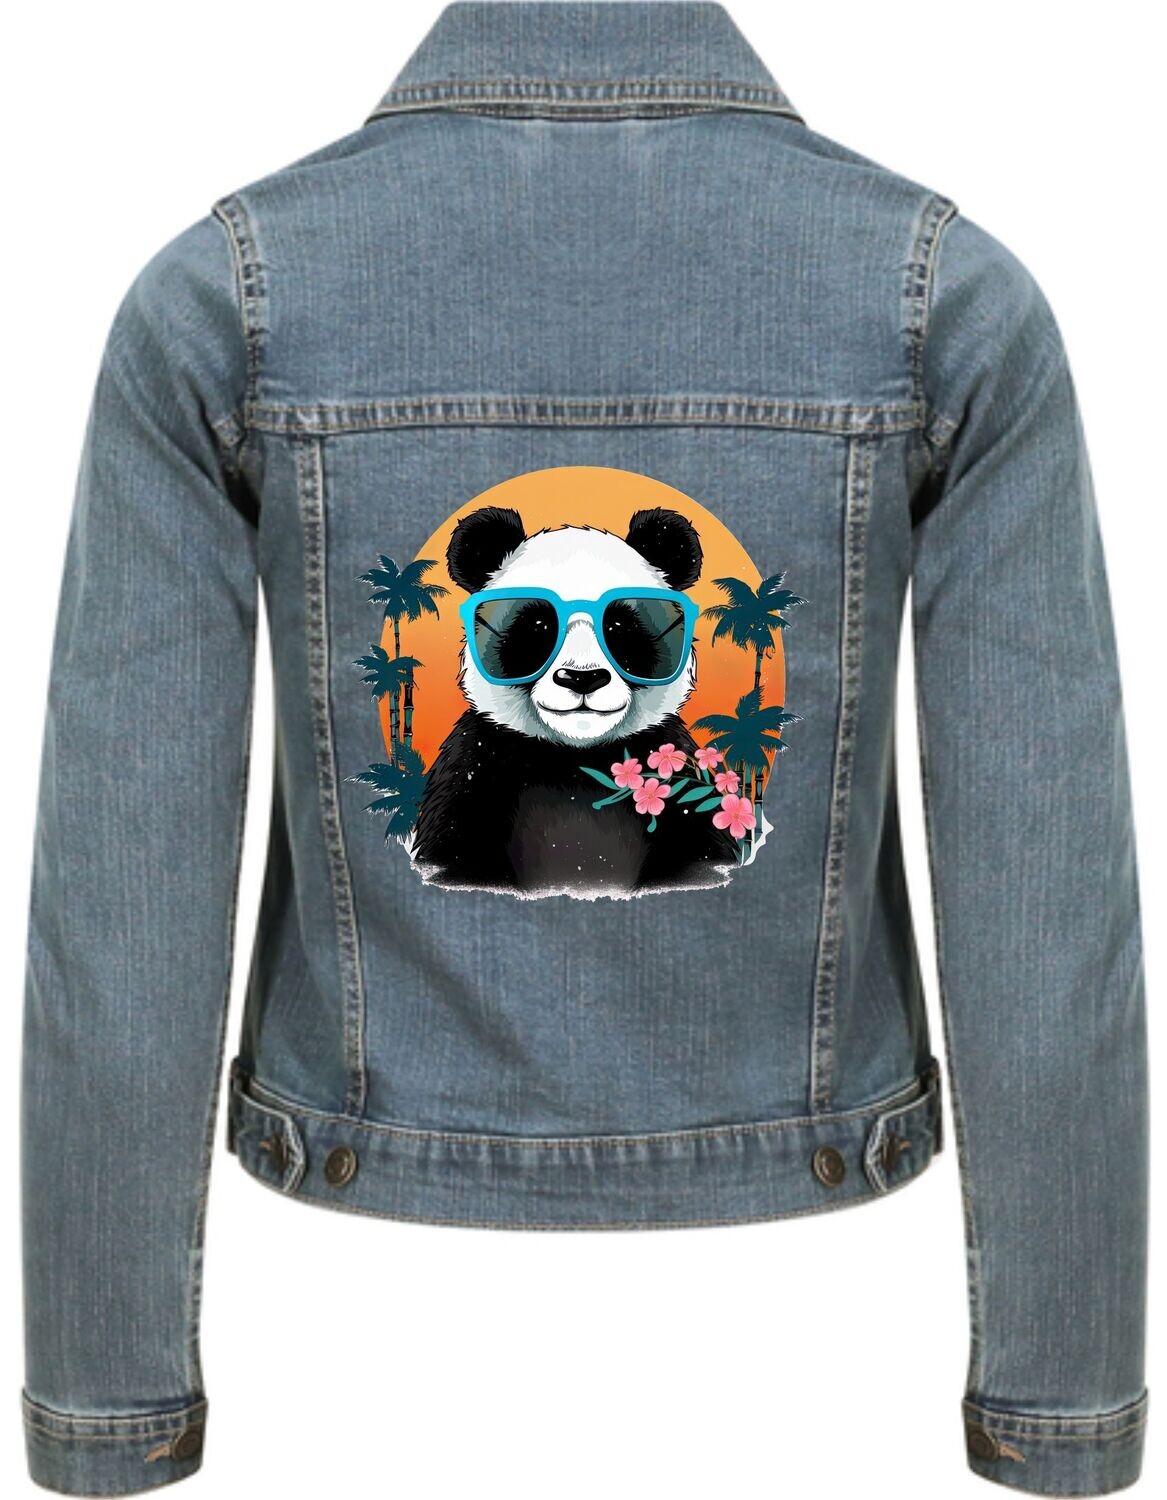 Jeansjacke Panda